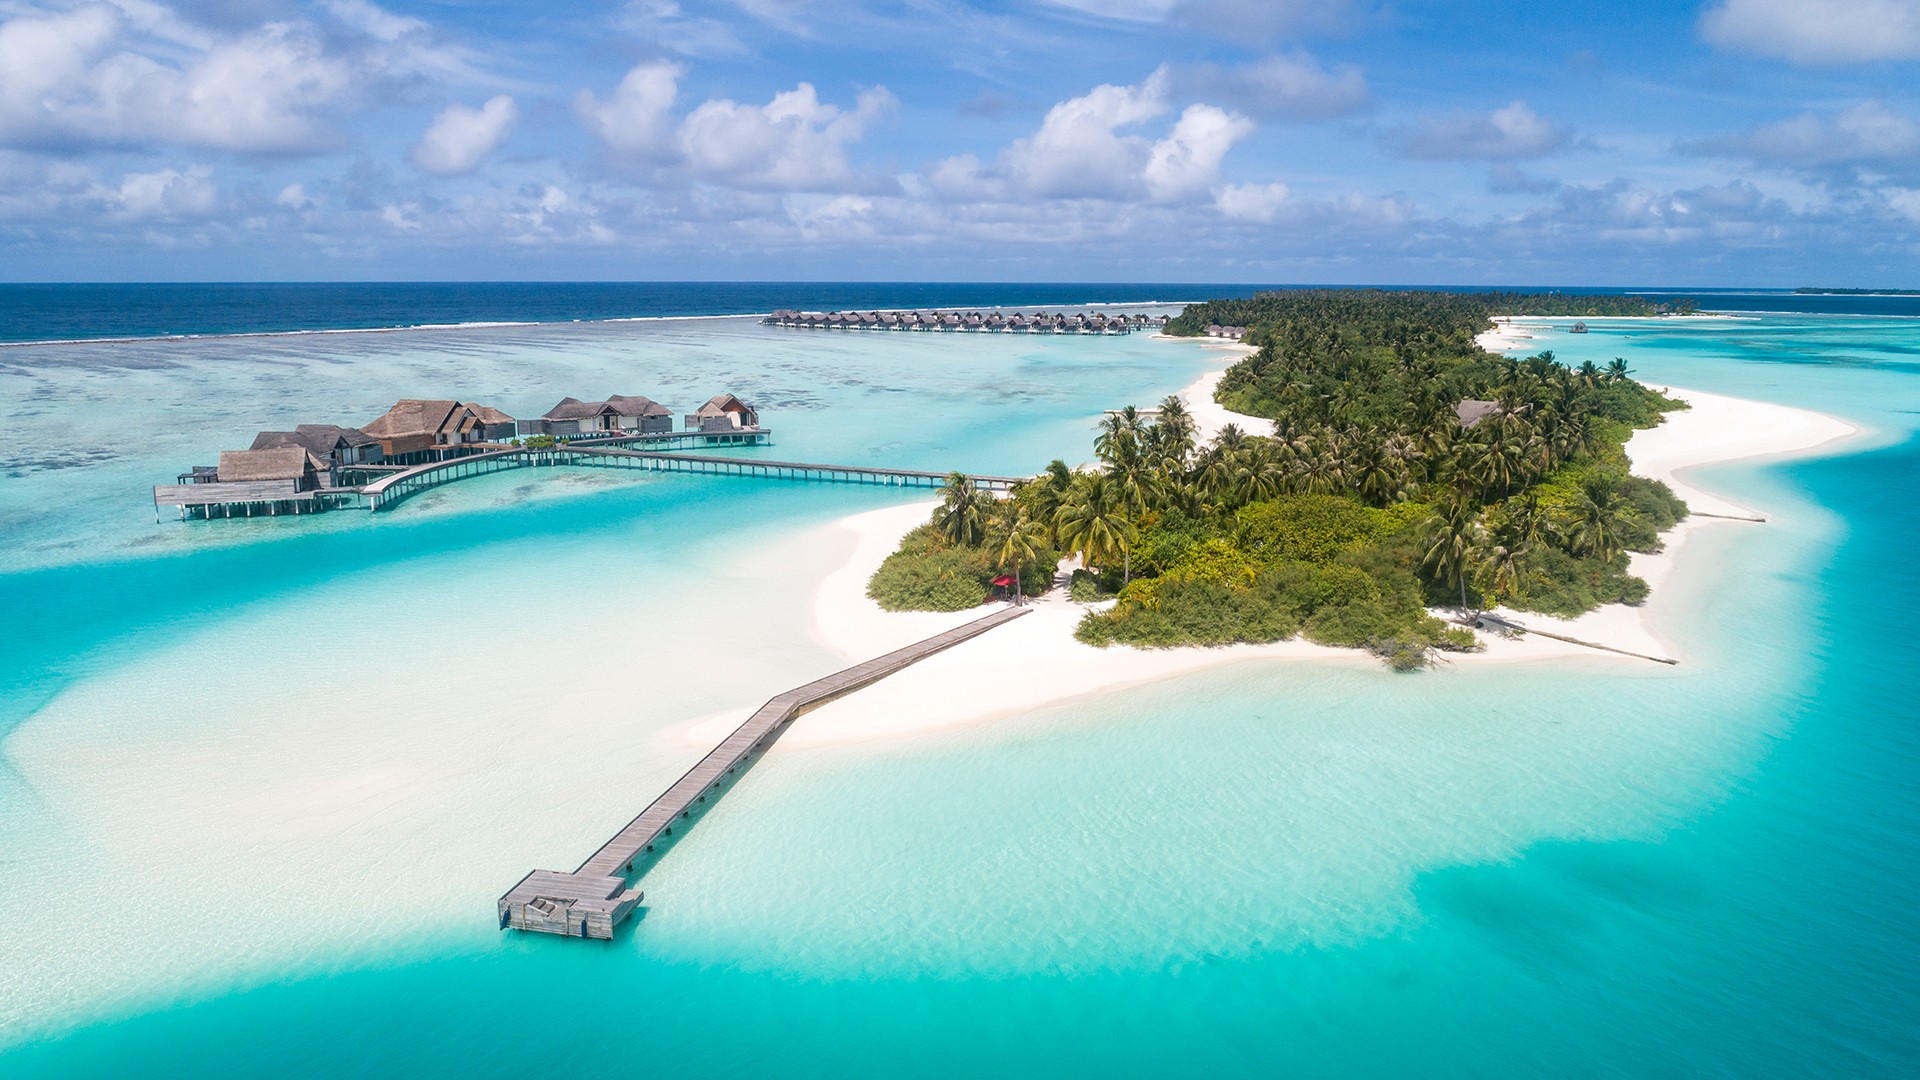 Maldives Private Island Villas With Underwater Restaurant And Floating Overwater Restaurant